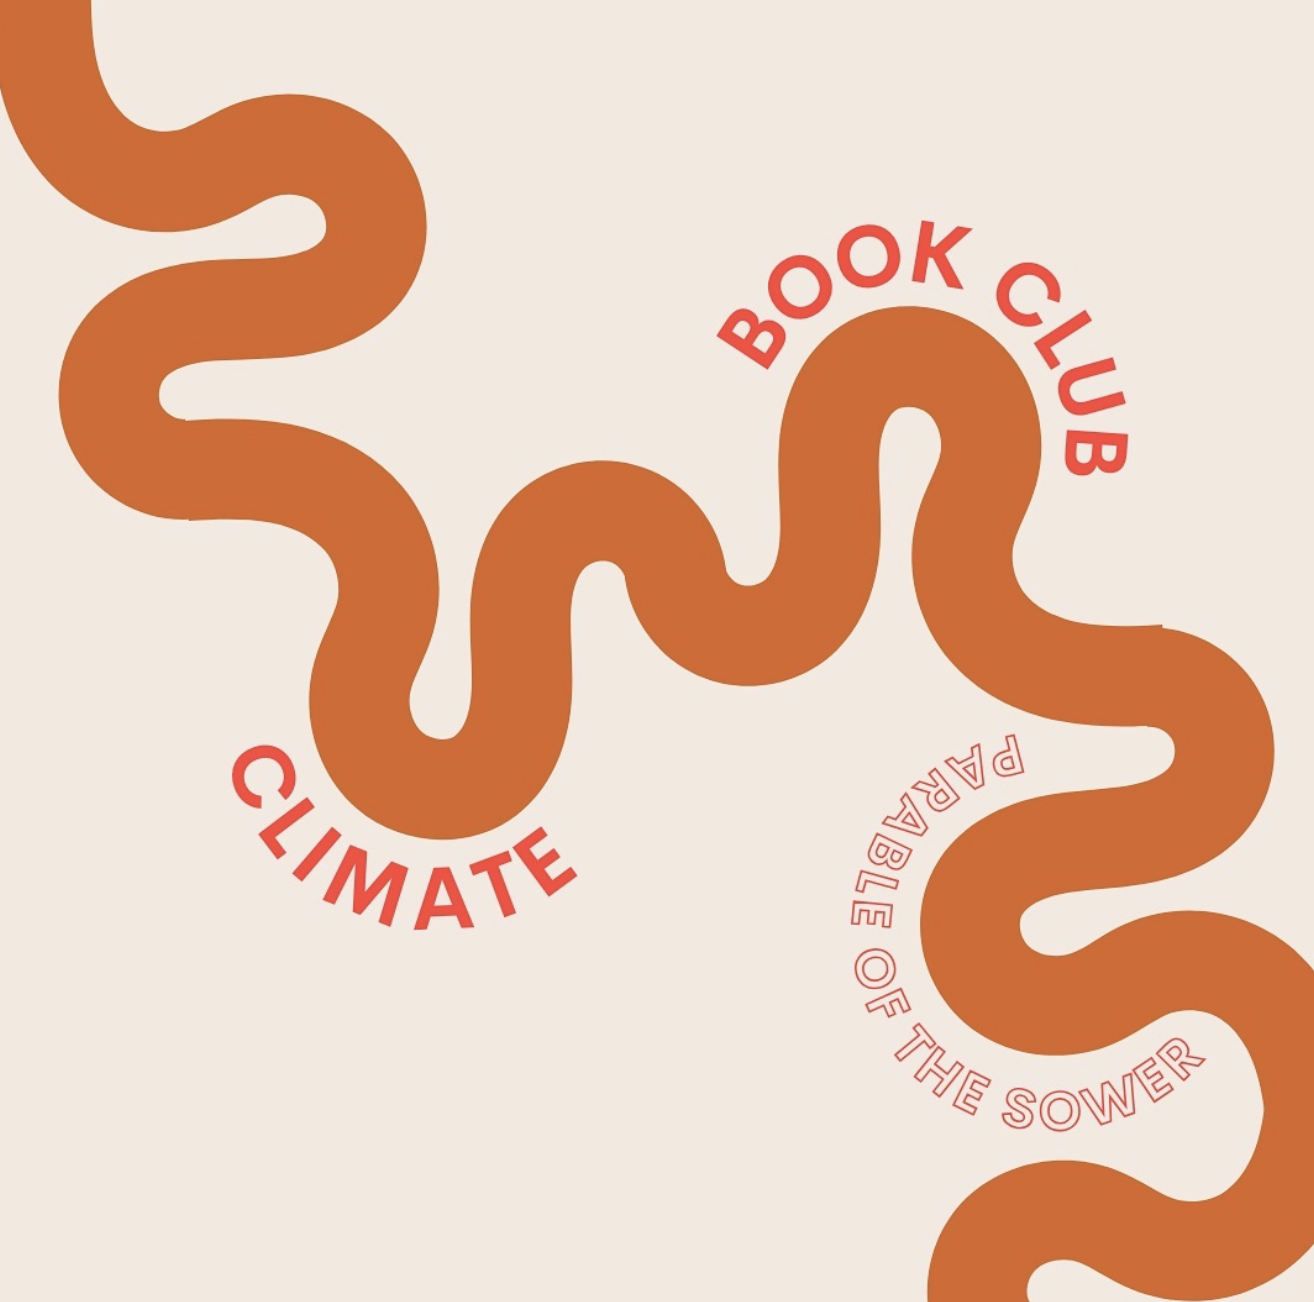 Climate Book Club